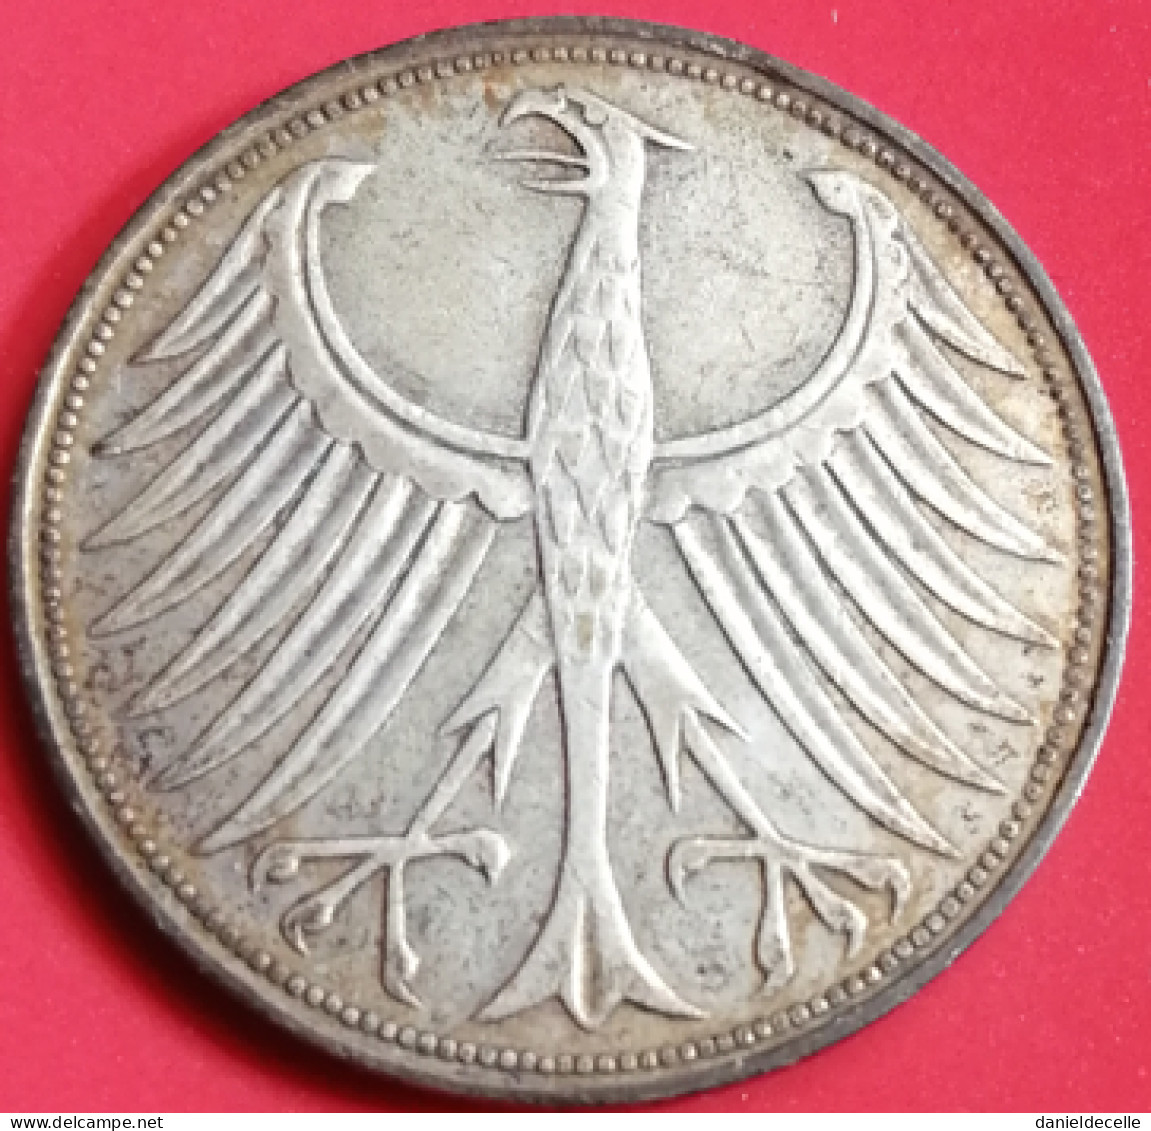 5 Mark RFA 1951 D (Munich) - 5 Reichsmark